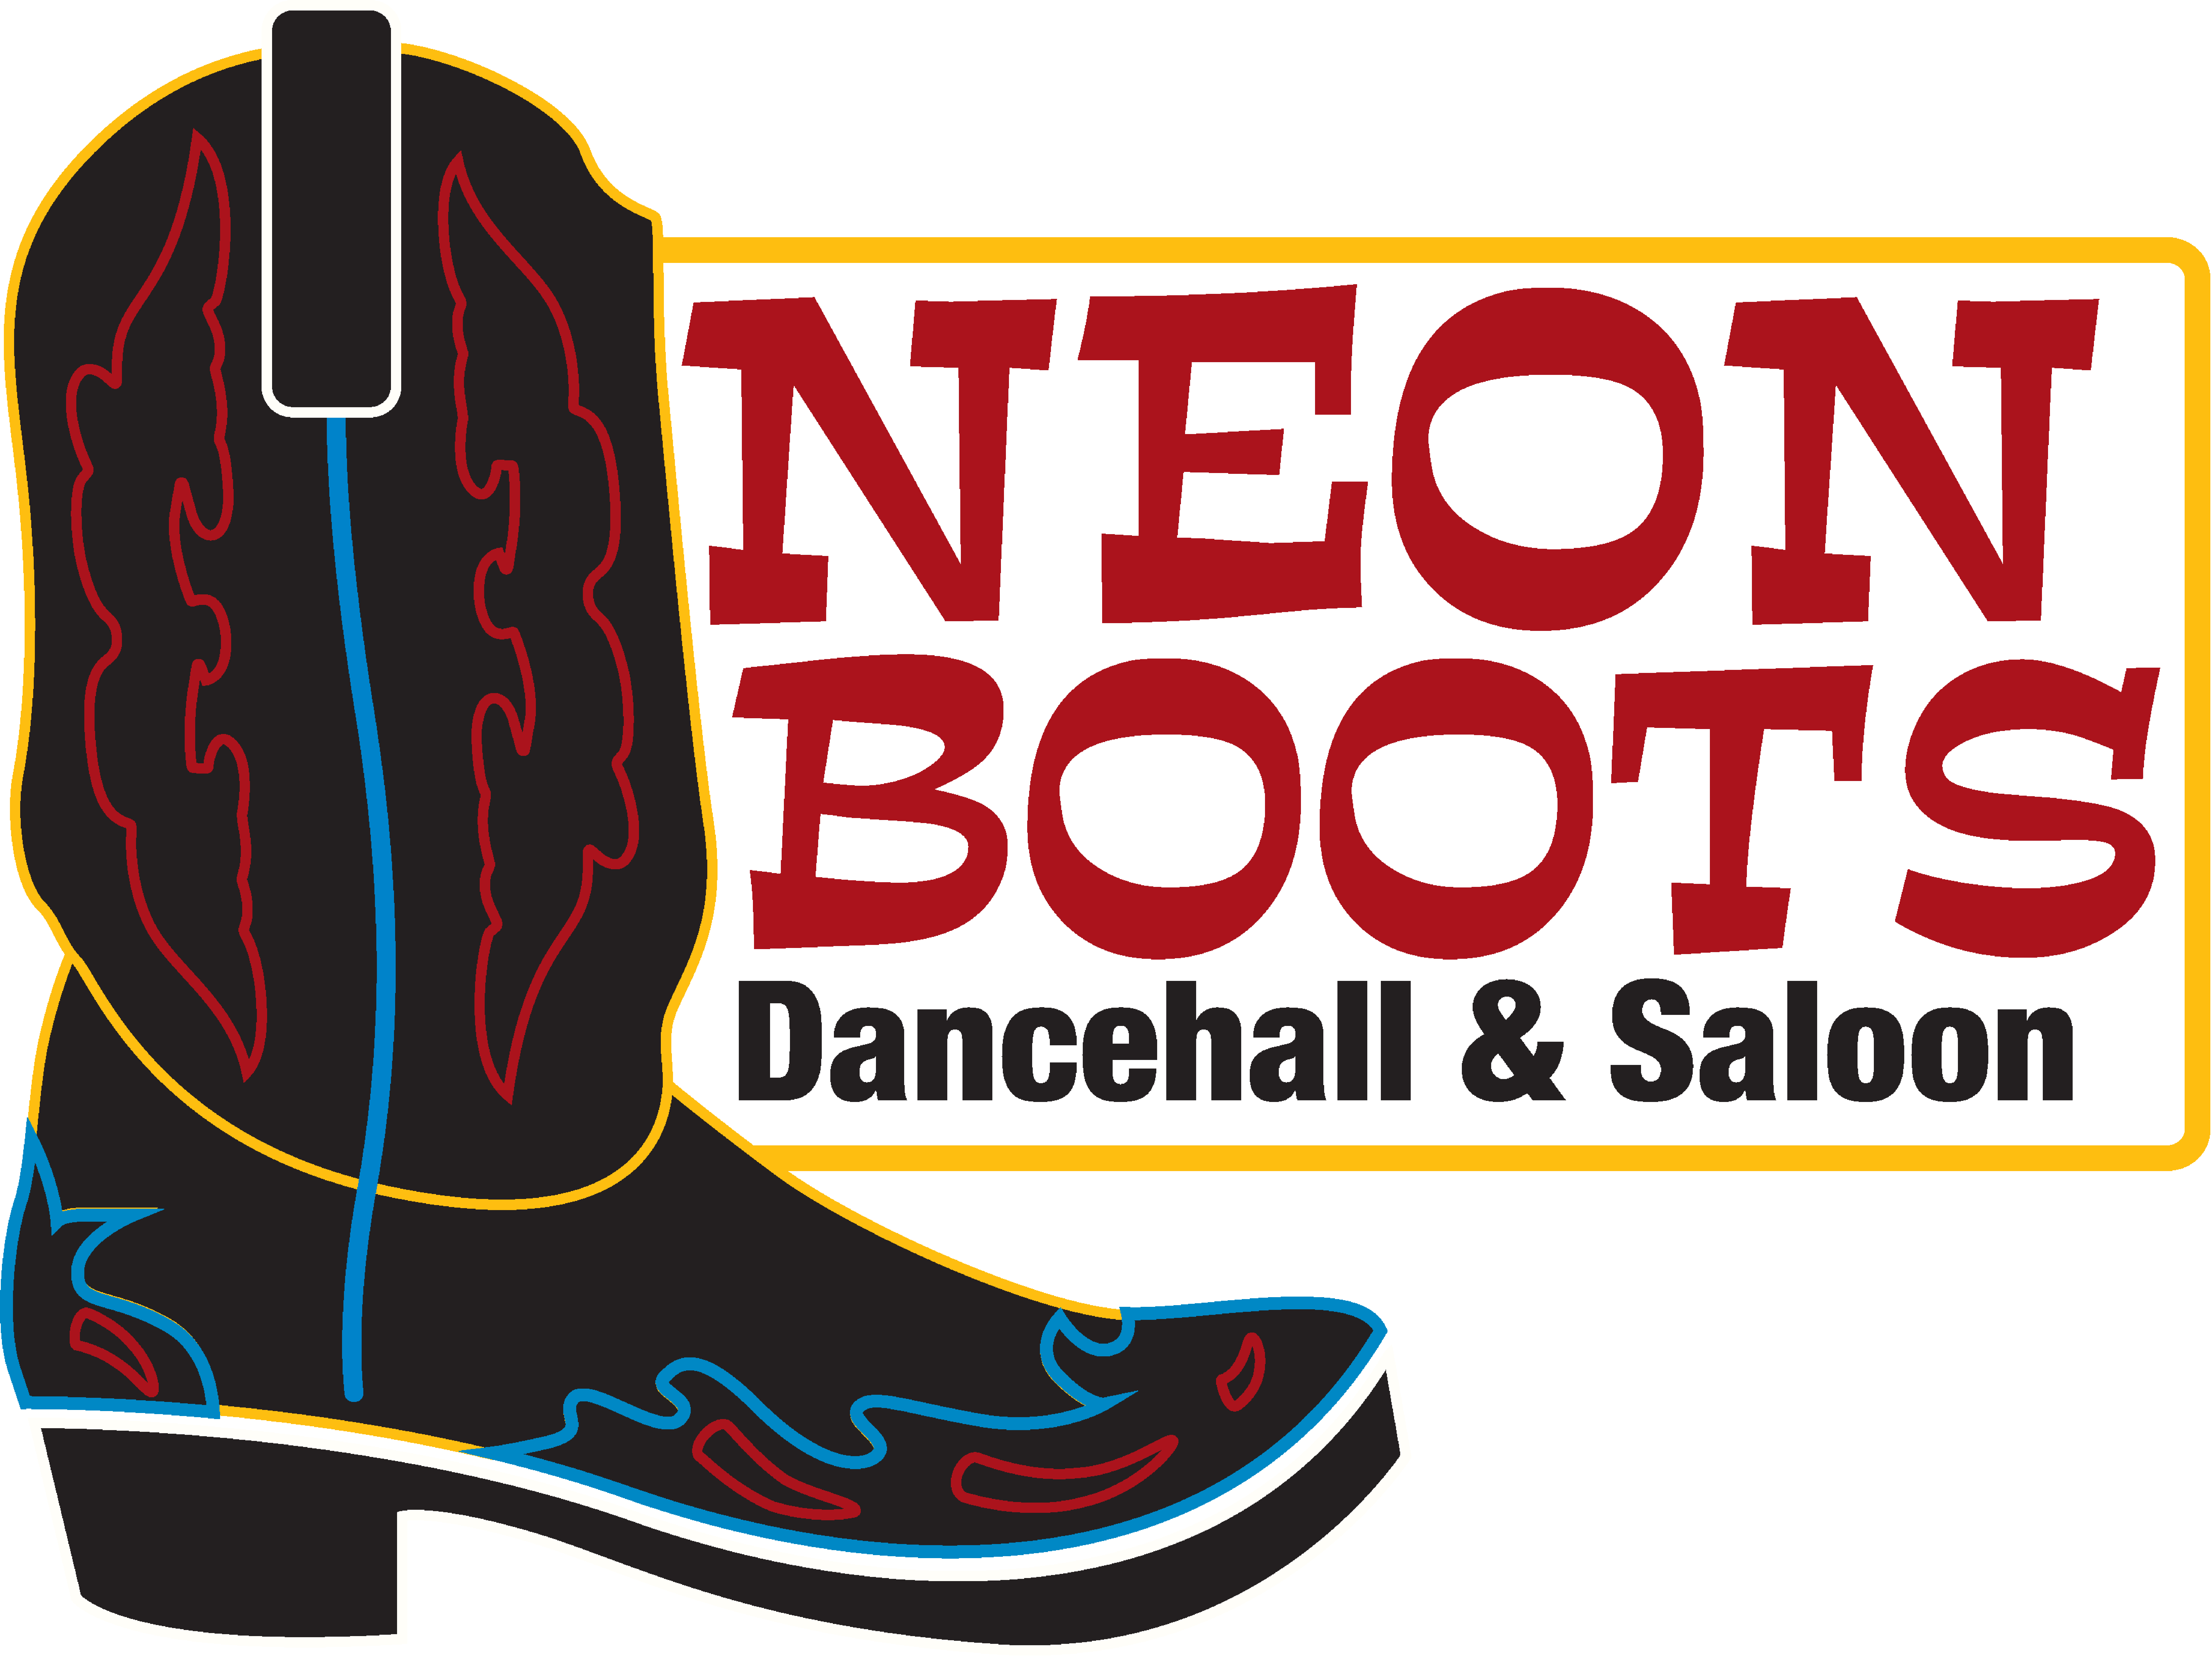 Neon Boots Dancehall & Saloon